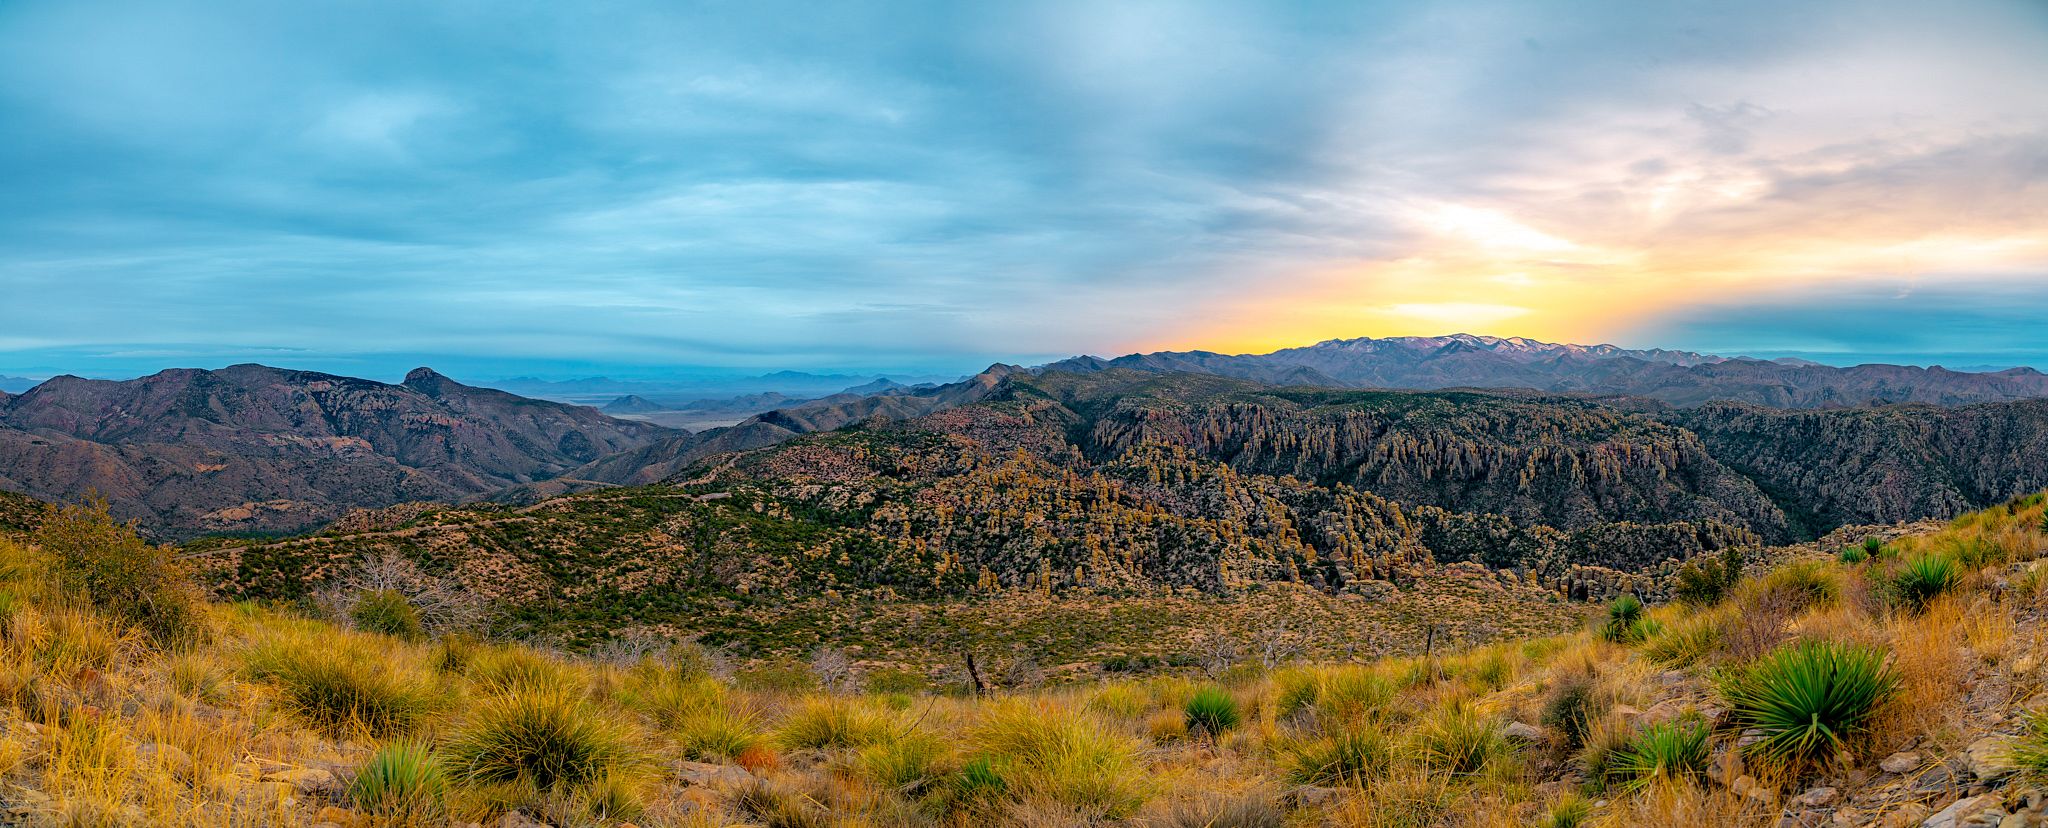 Sunset at Chiricahua National Monument